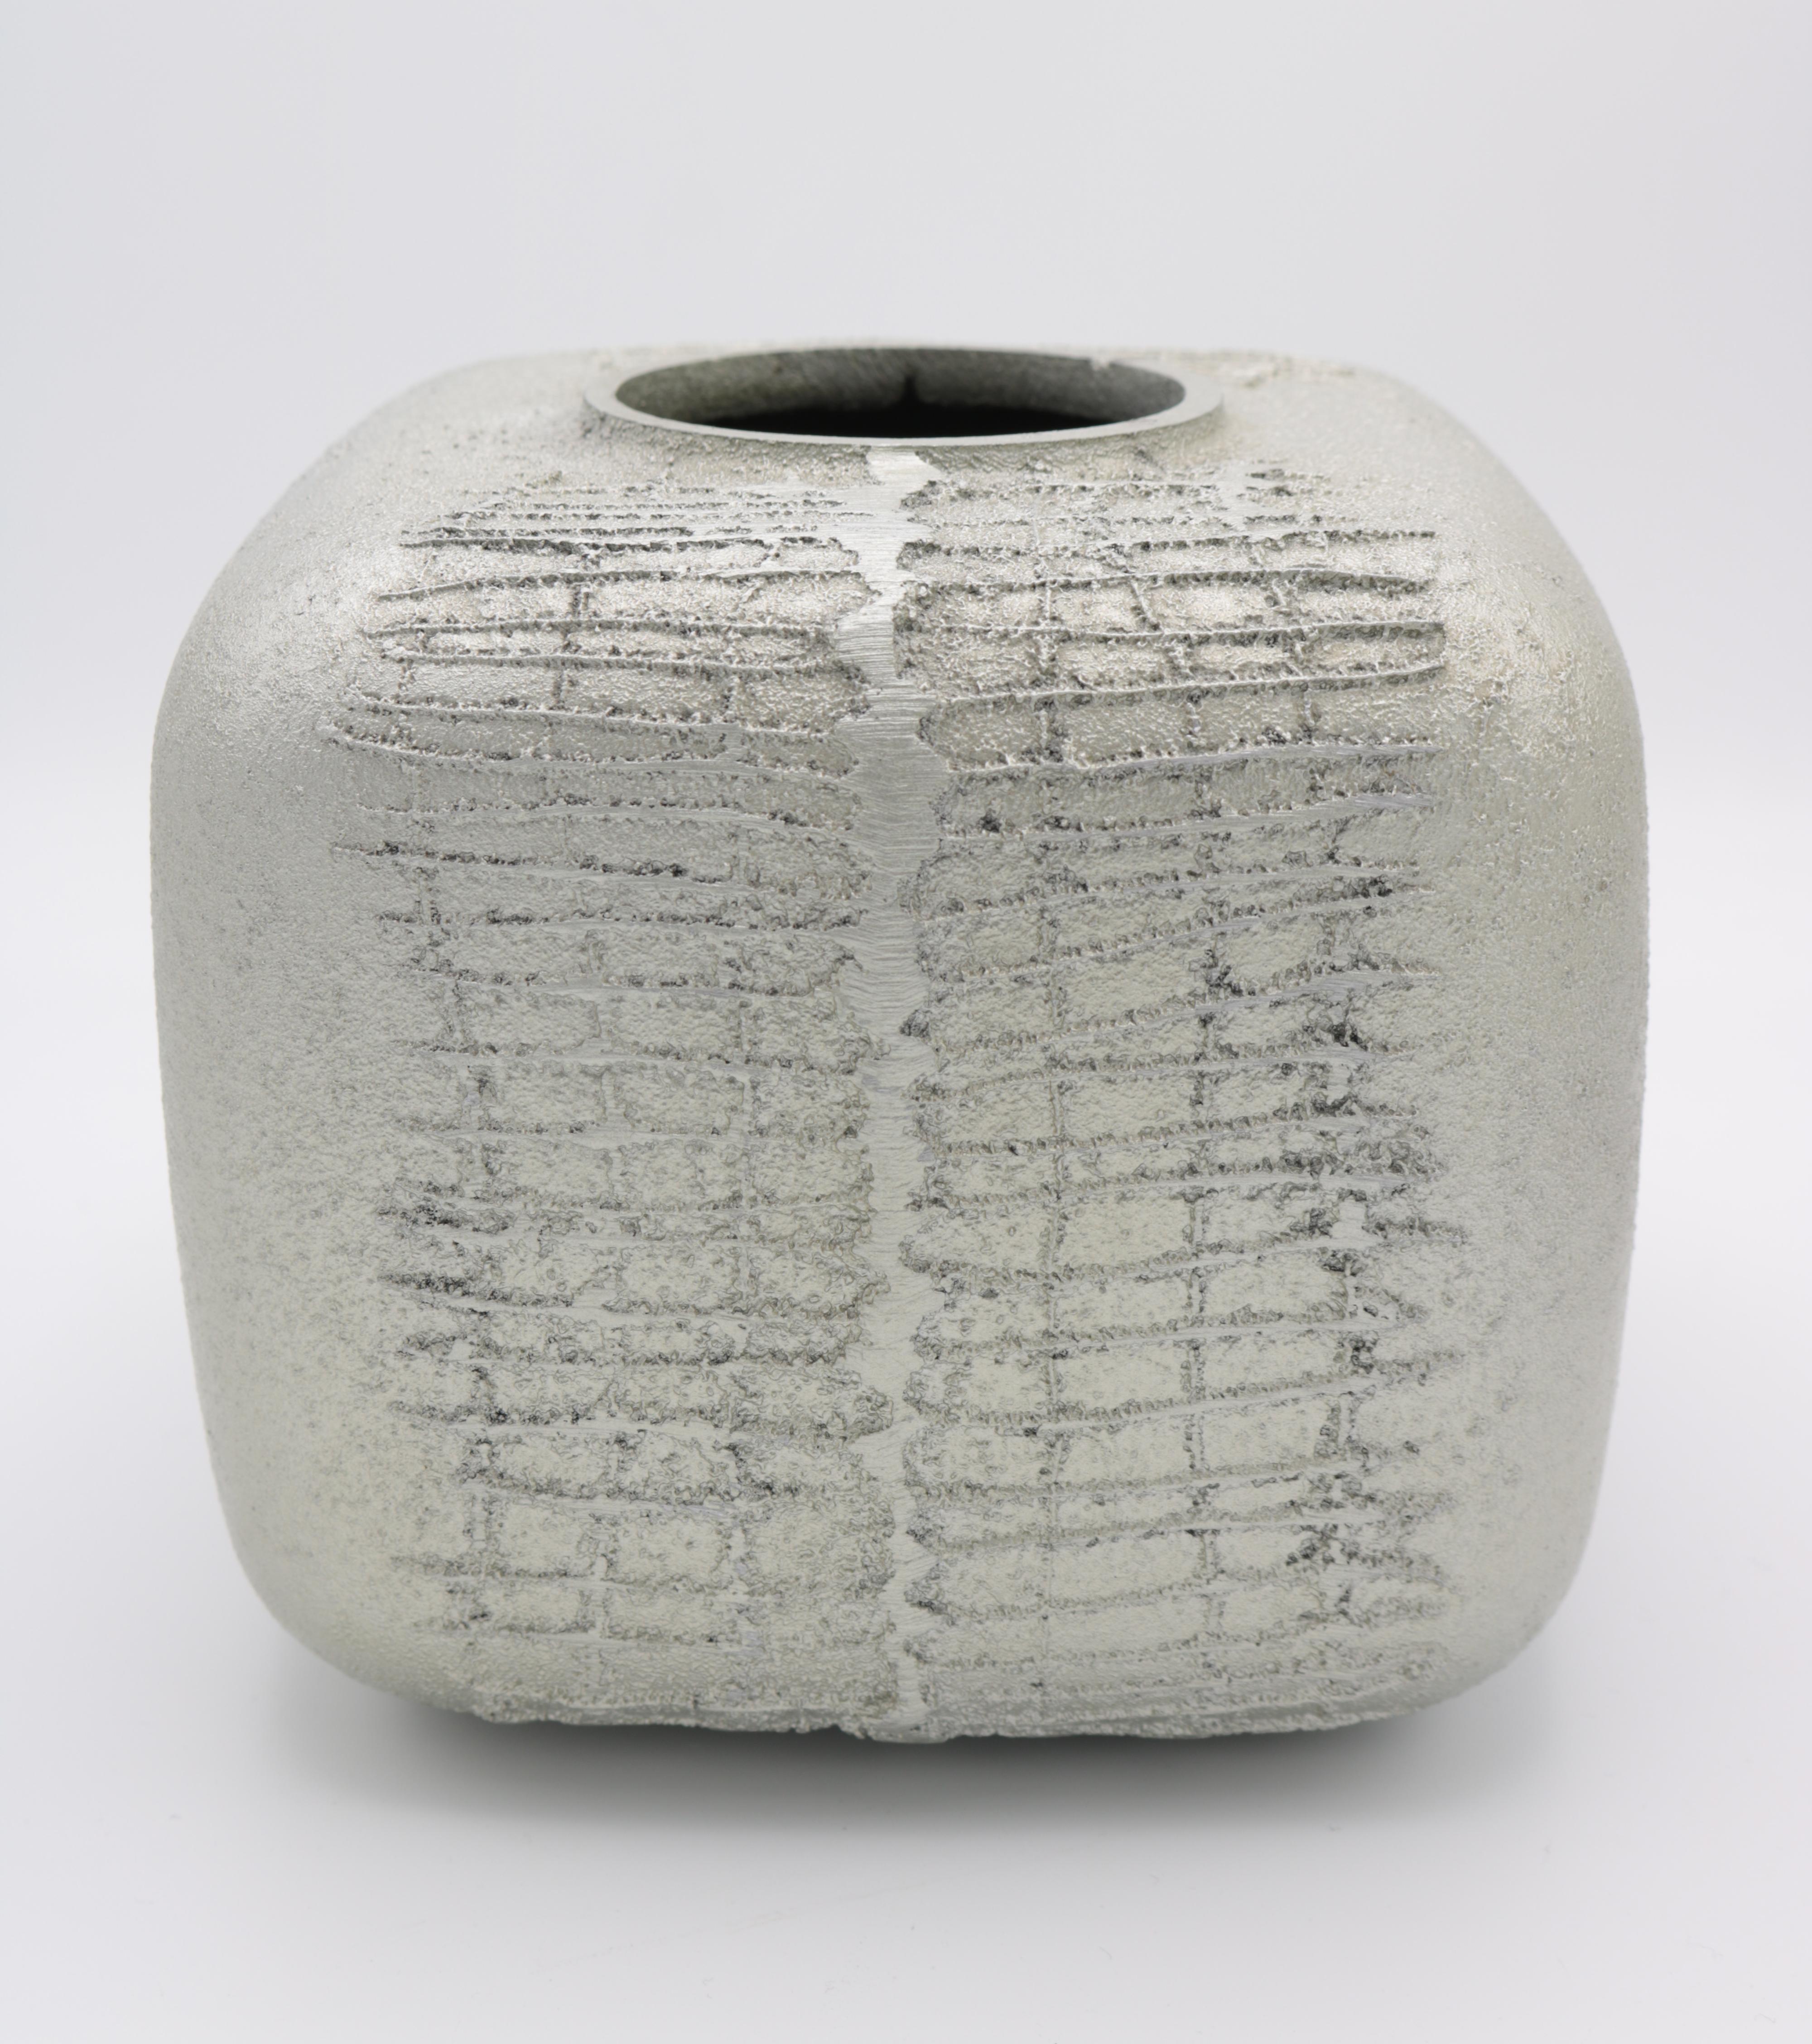 Modernist vase by Lorenzo Burchiellaro. 
Textured cast aluminum.